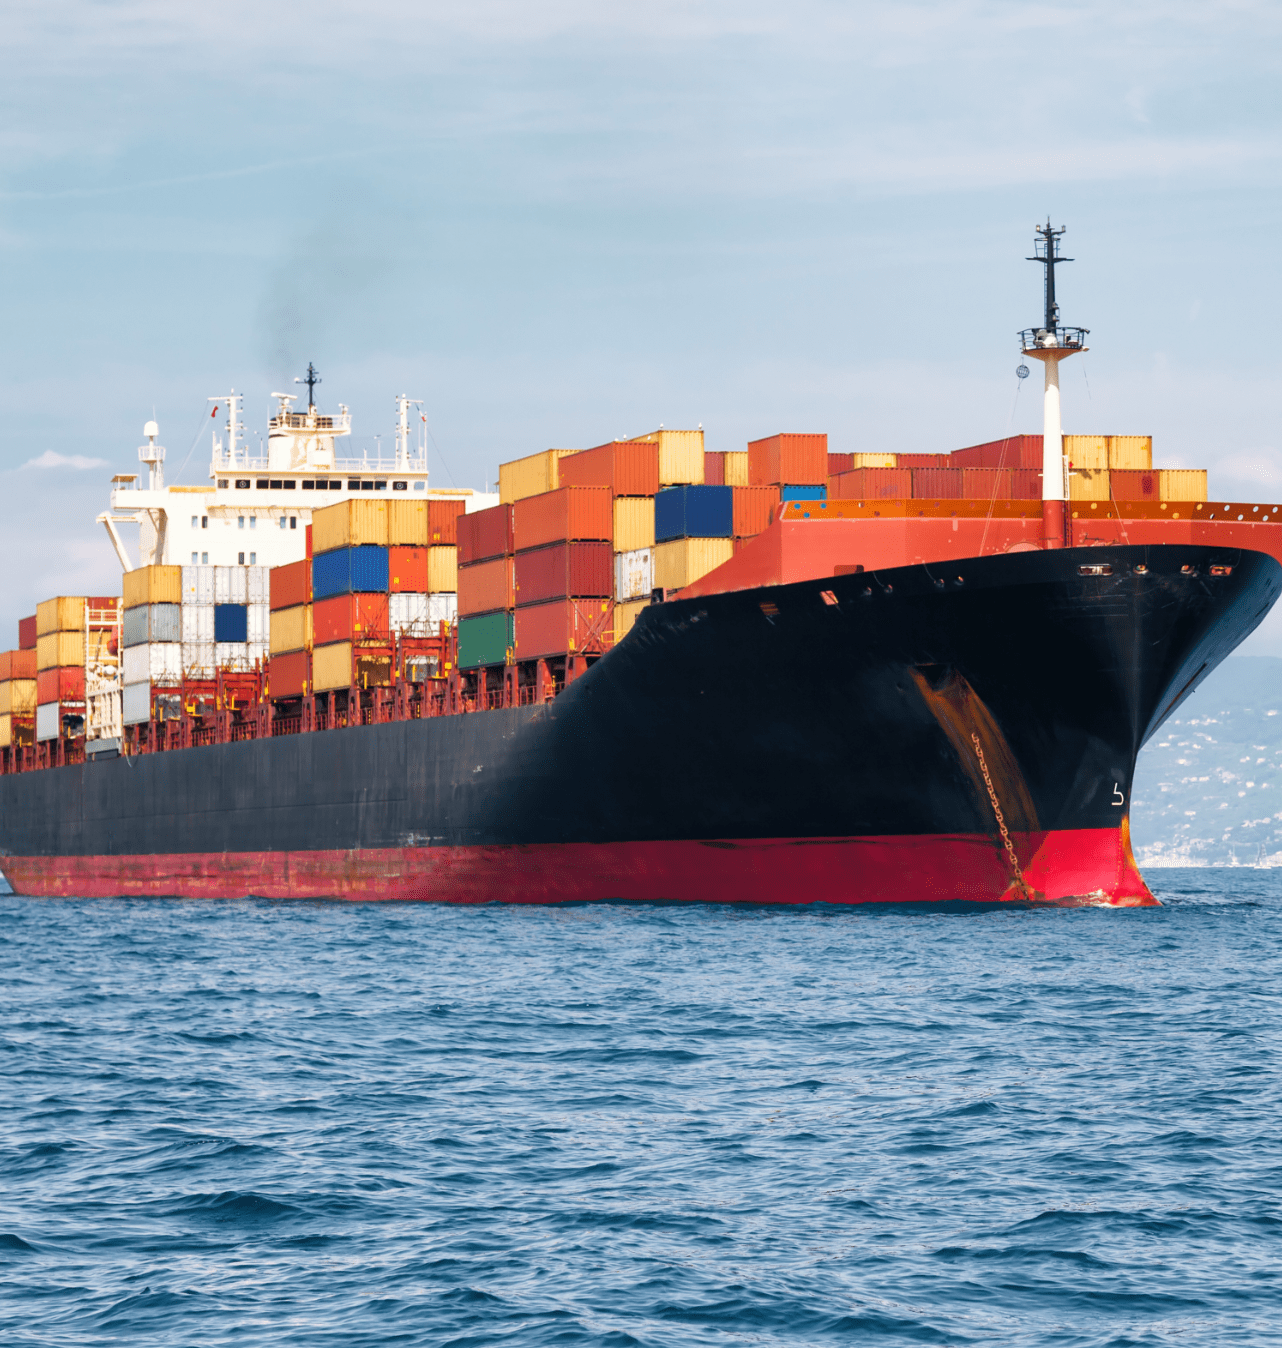 haulage hull, transport and distribution hull, transport logistics hull